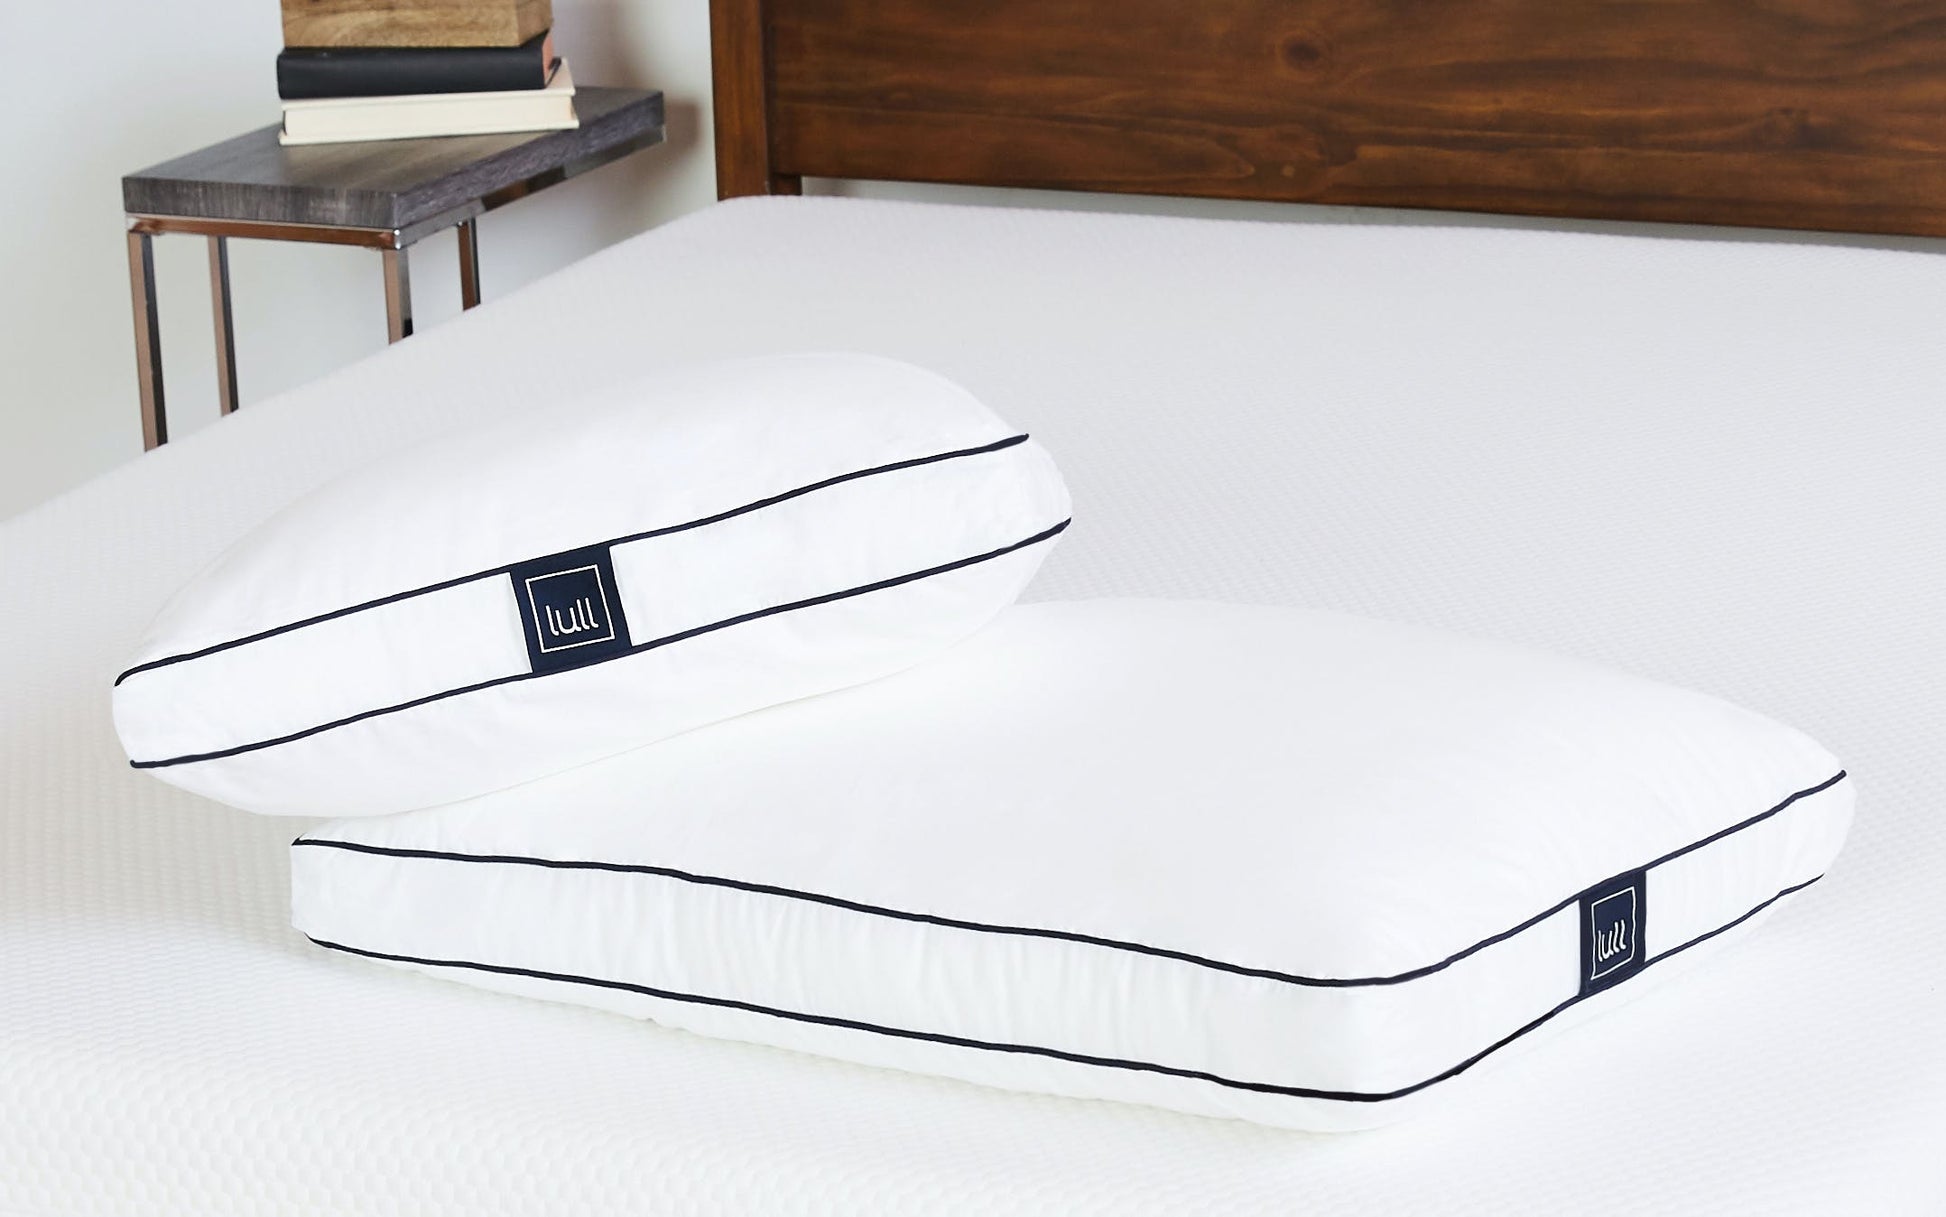 Memory Foam Pillow Cooling Gel Pillow Cervical Pillow Bed Pillows for 21